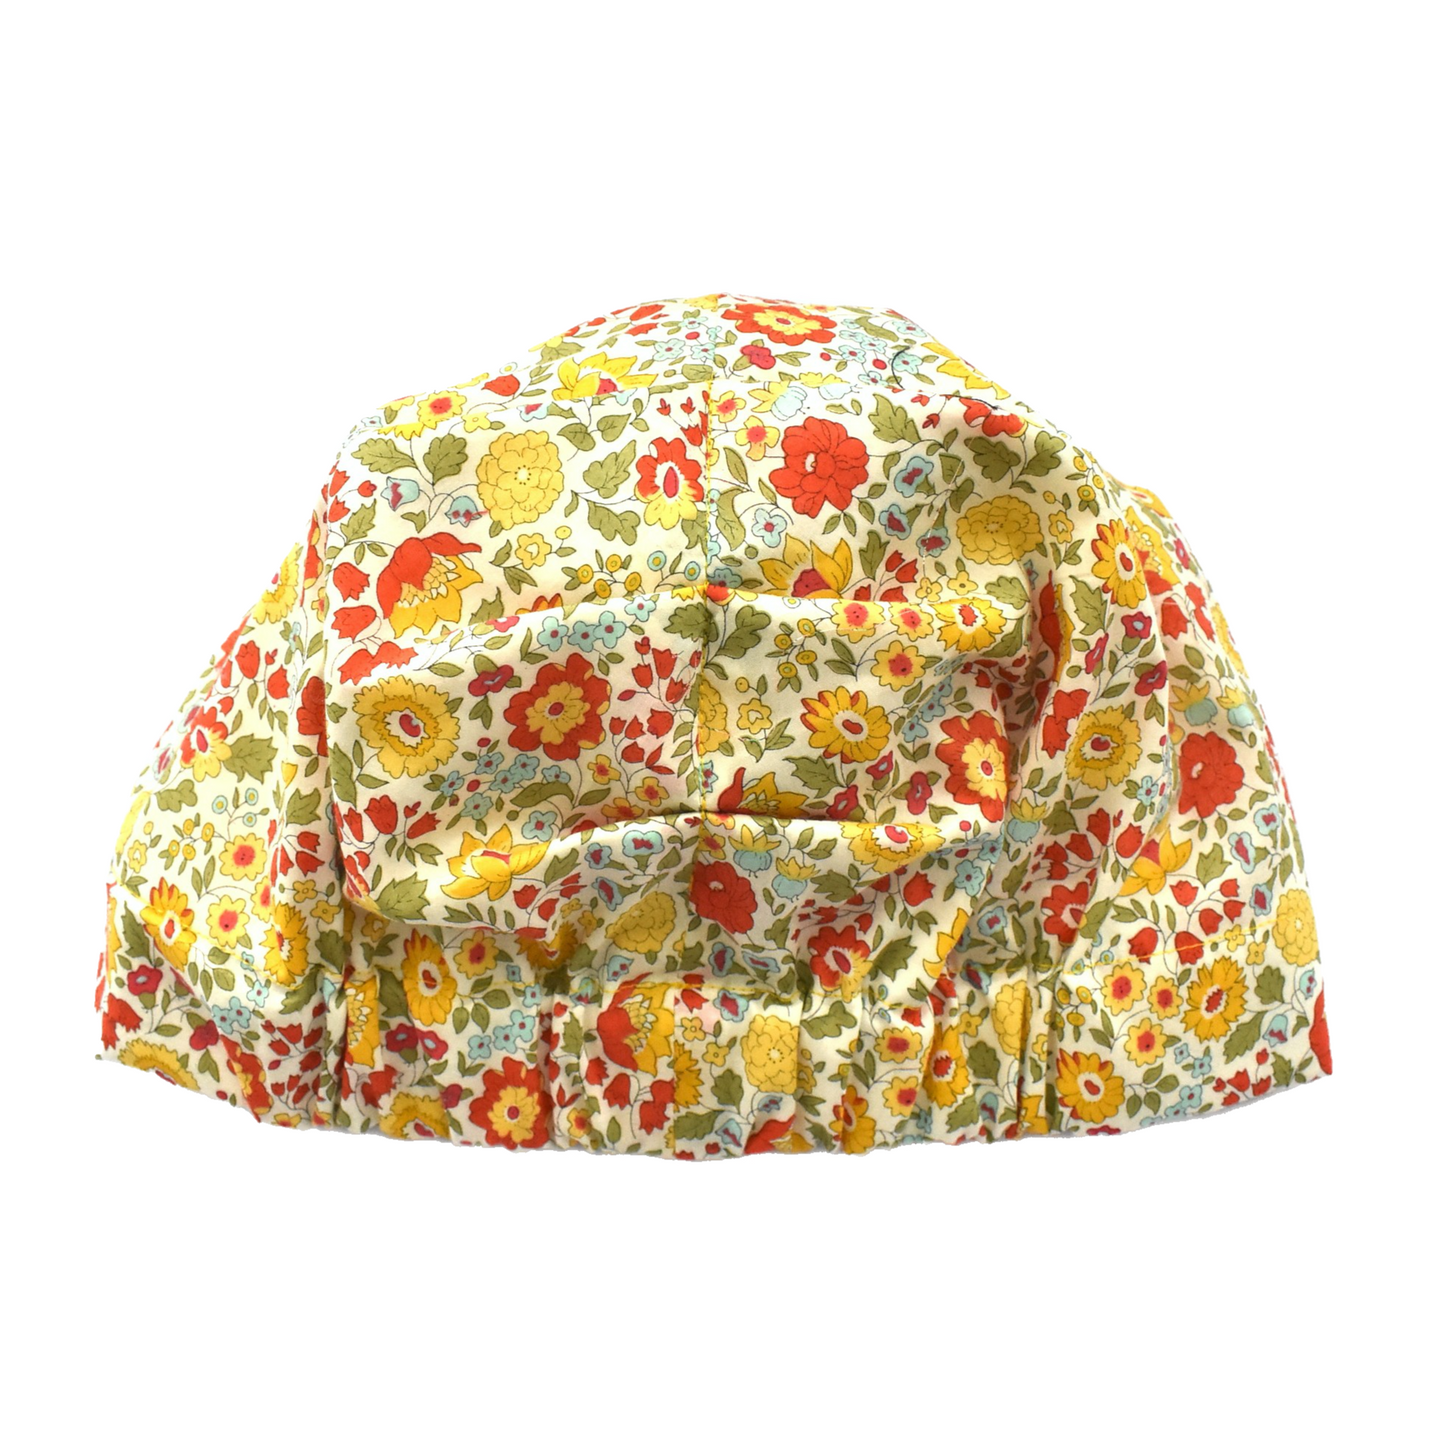 Ladies Turban Hat - Yellow D'anjo Liberty of London print